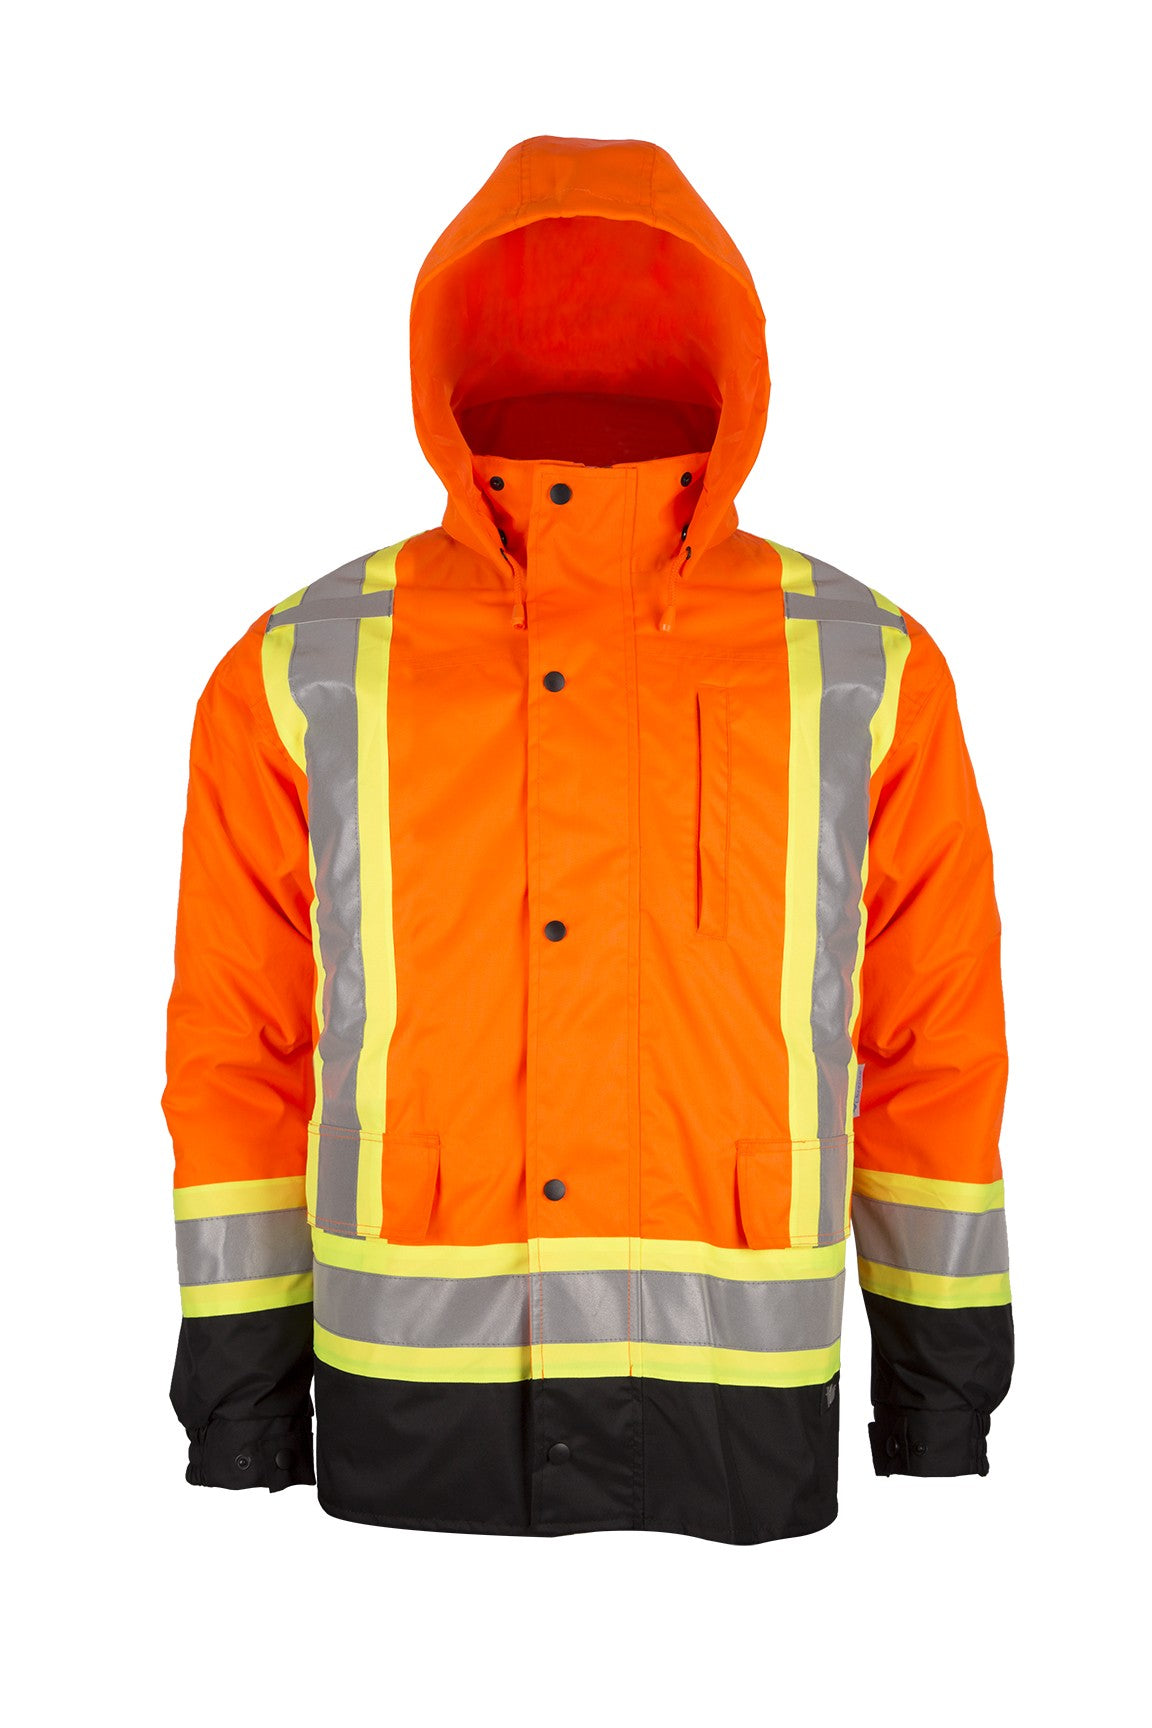 Terra Men's Hi-Vis Lined Winter Work Jacket/Parka with Waterproof